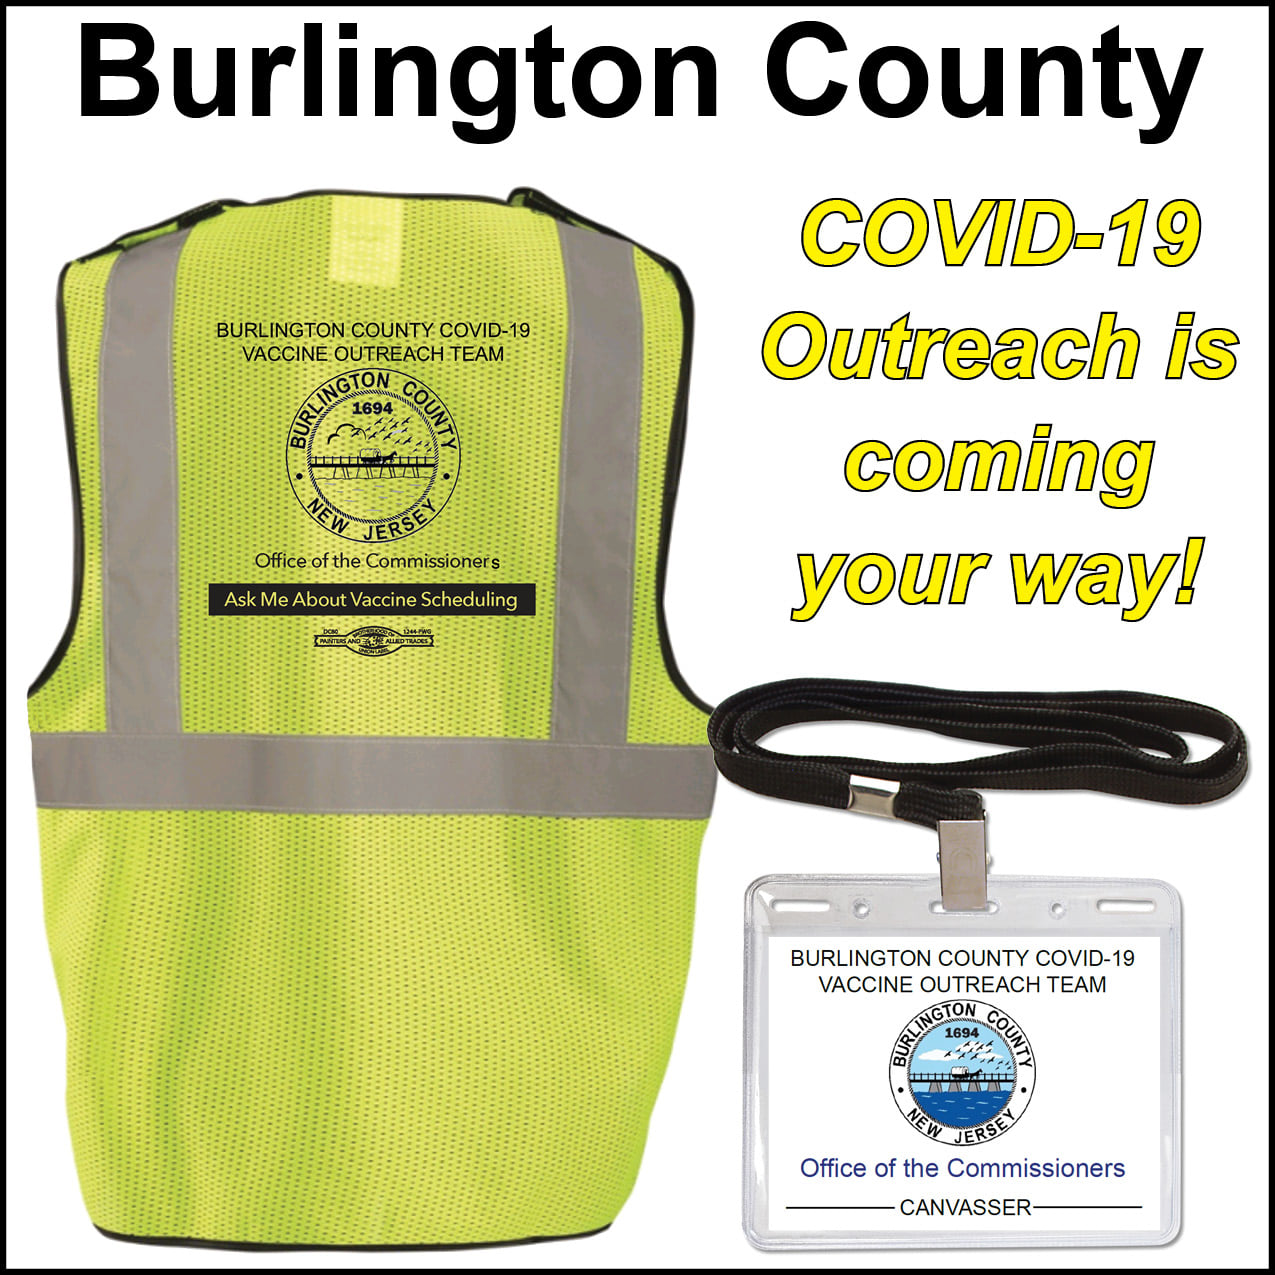 burlington county